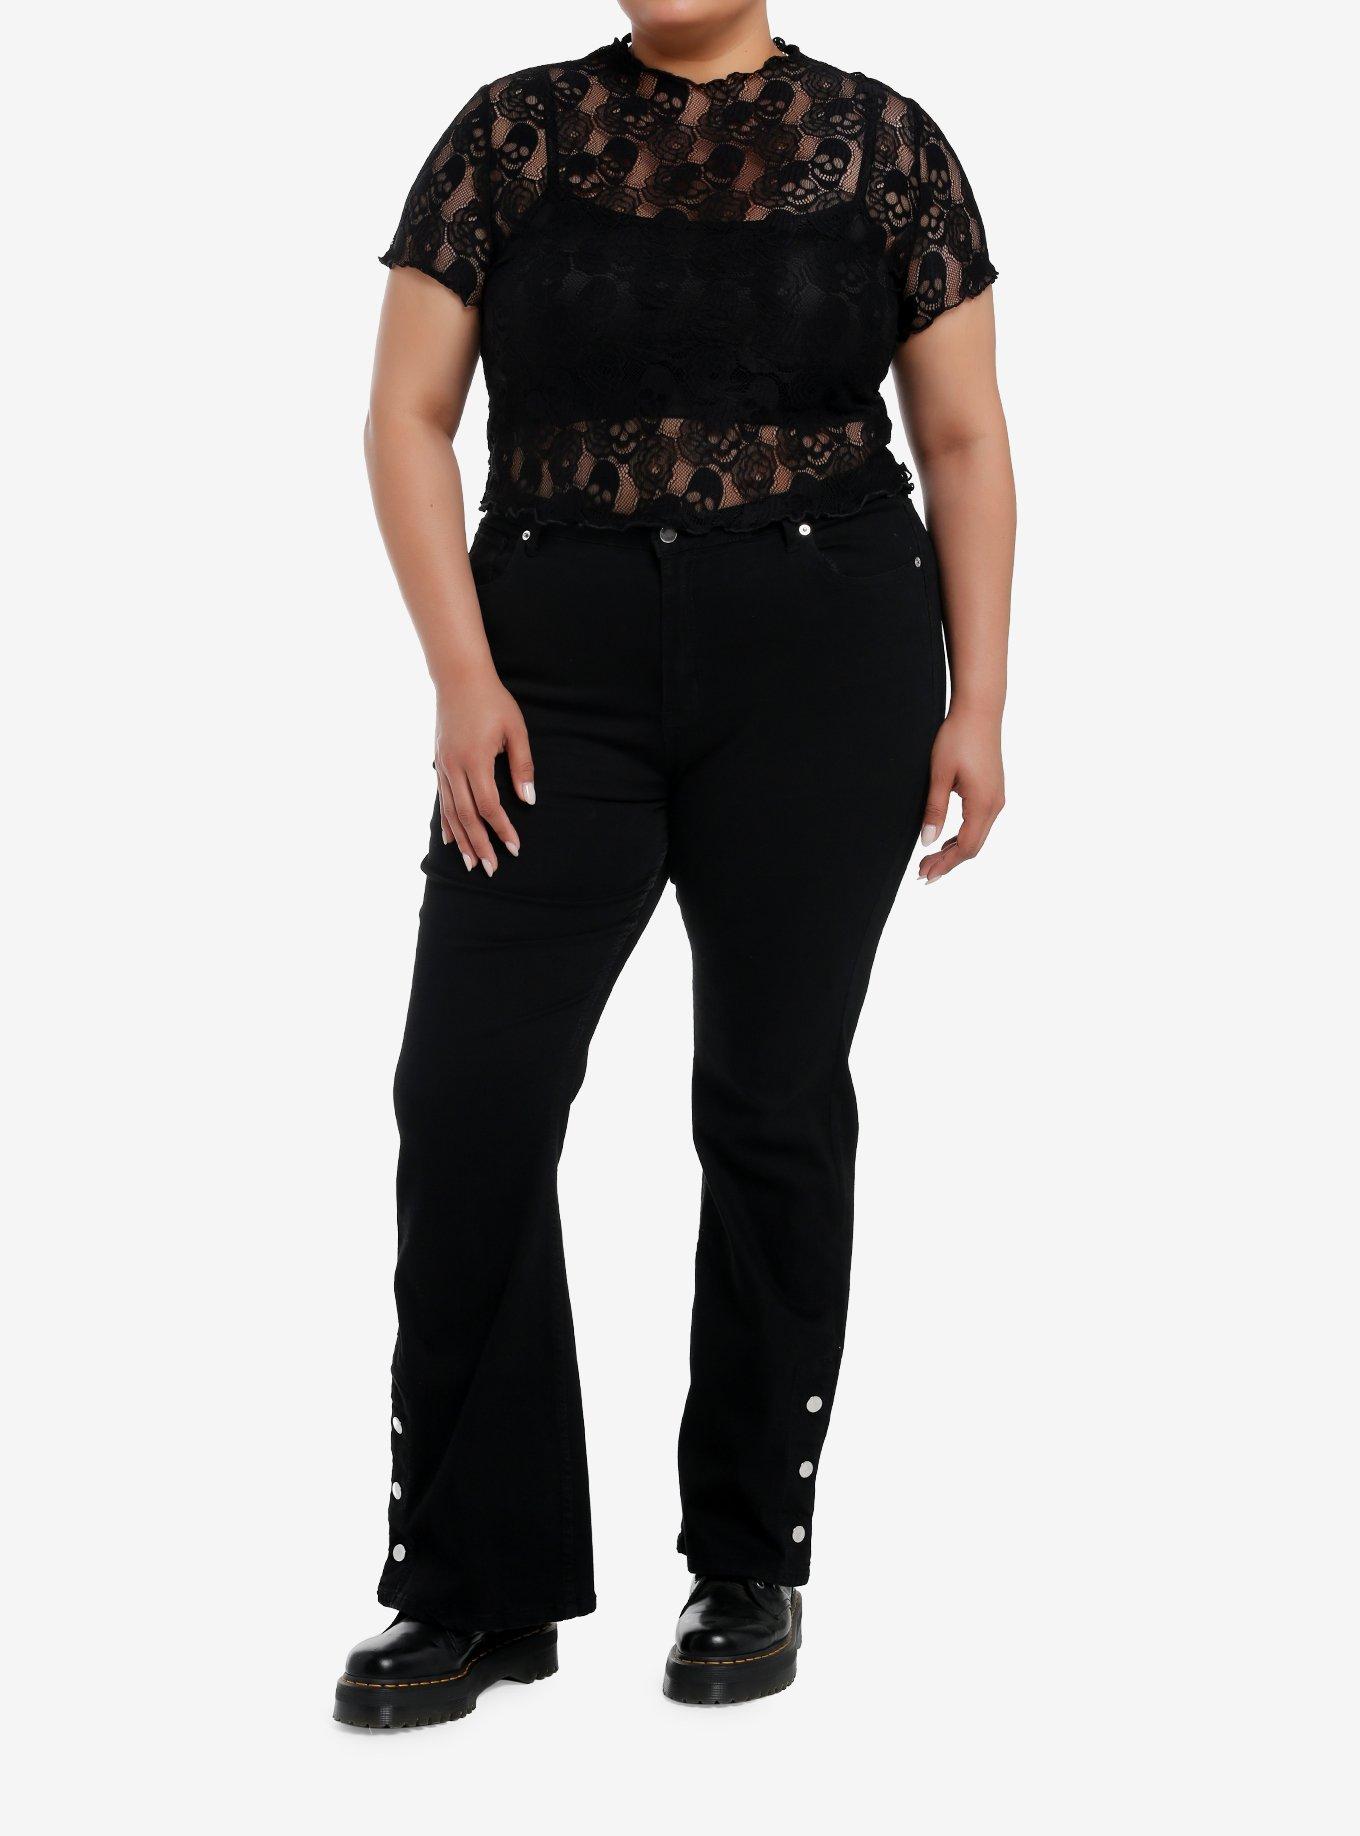 Daisy Street Black Skull Lace Girls Twofer Top Plus Size, BLACK, alternate